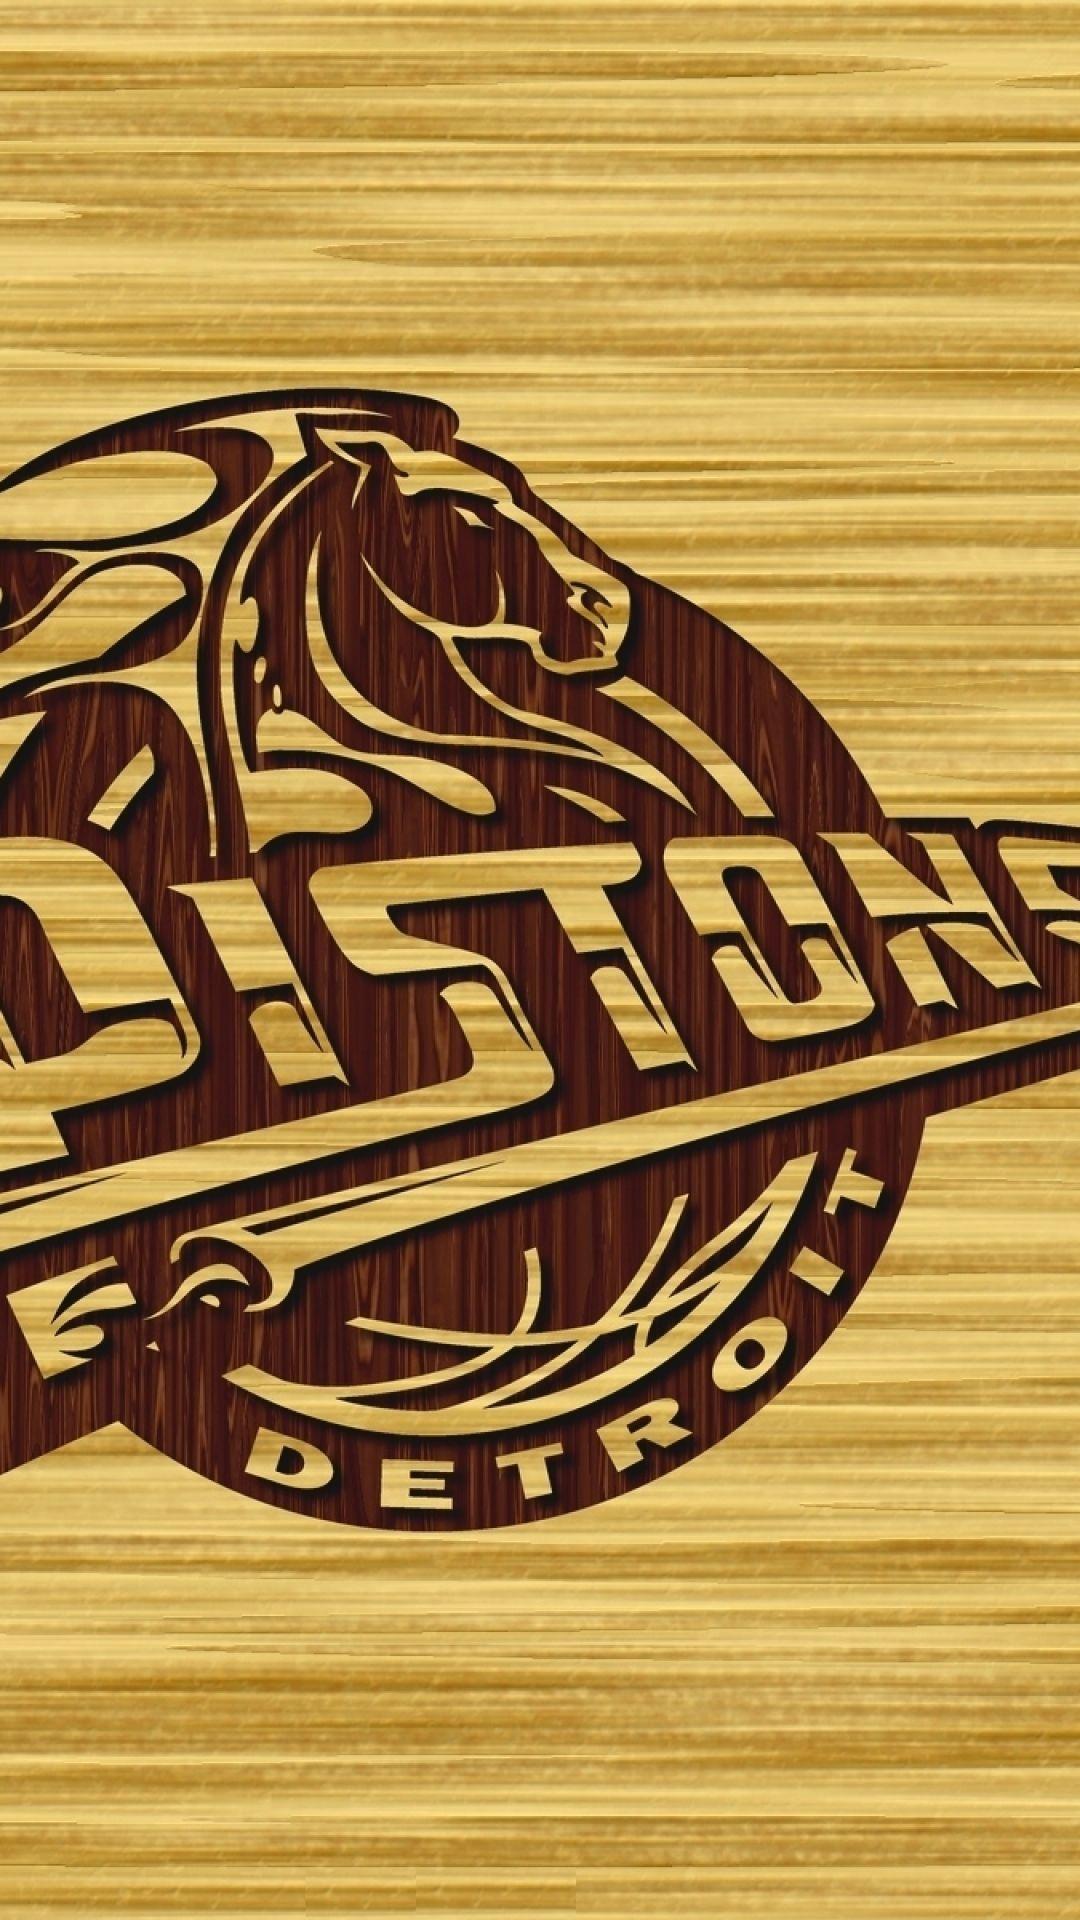 Download Wallpaper 1080x1920 Detroit pistons, Basketball, Detroit